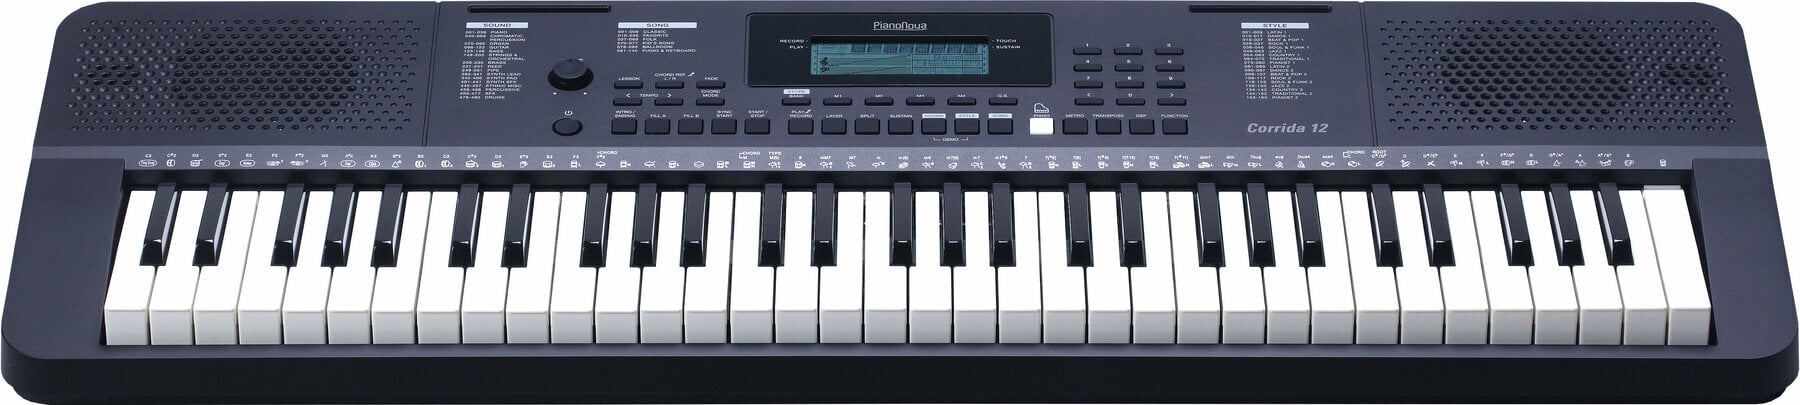 Keyboard s dynamikou Pianonova Corrida 12